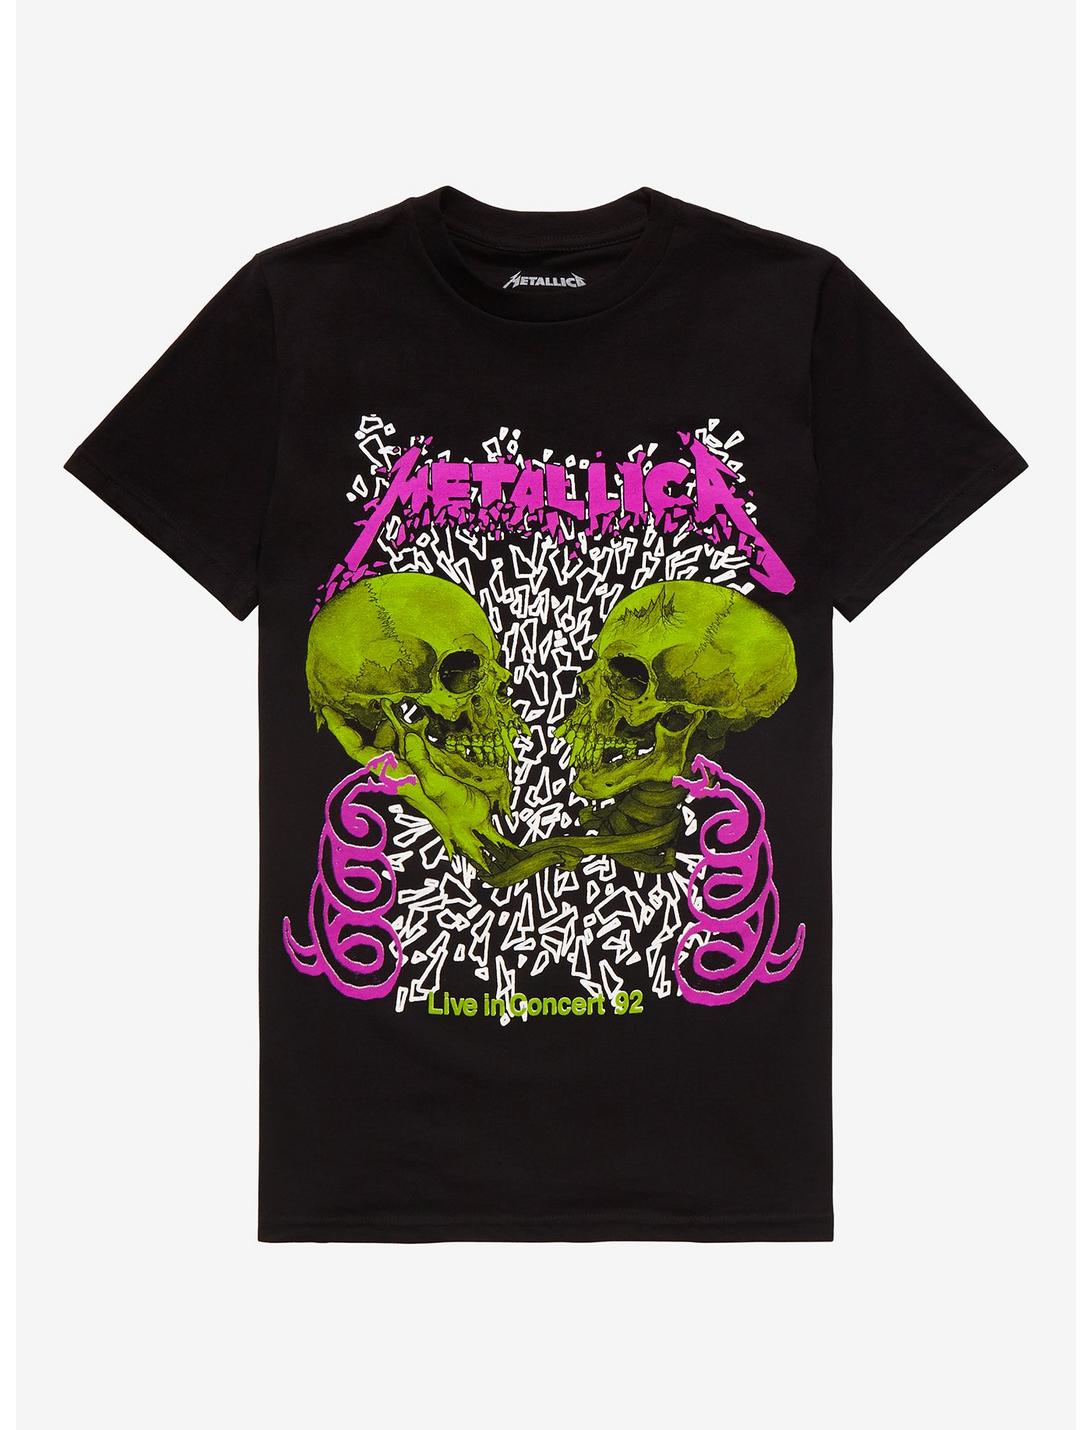 Metallica Neon Skull Boyfriend Fit Girls T-Shirt, BLACK, hi-res